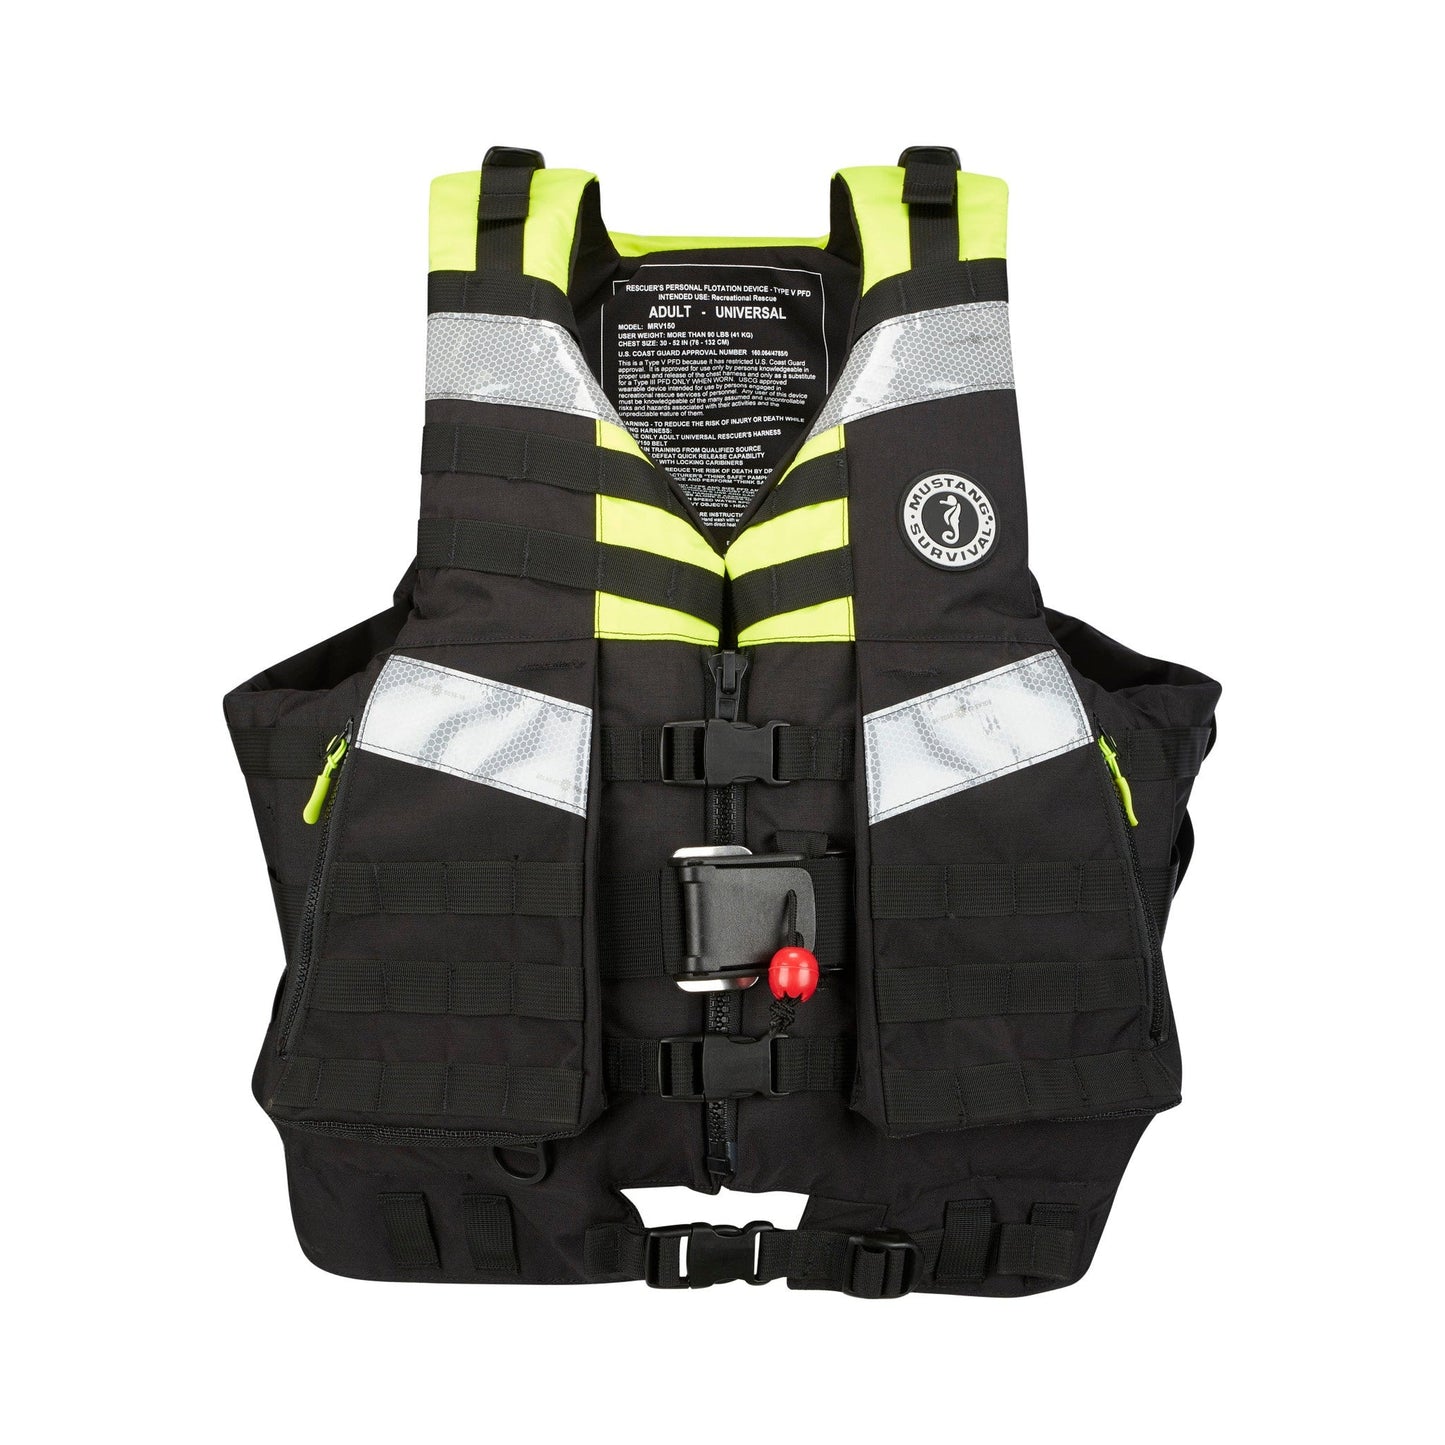 VFI Universal Swift Water Rescue Vest de Mustang Survival - MRV150 02